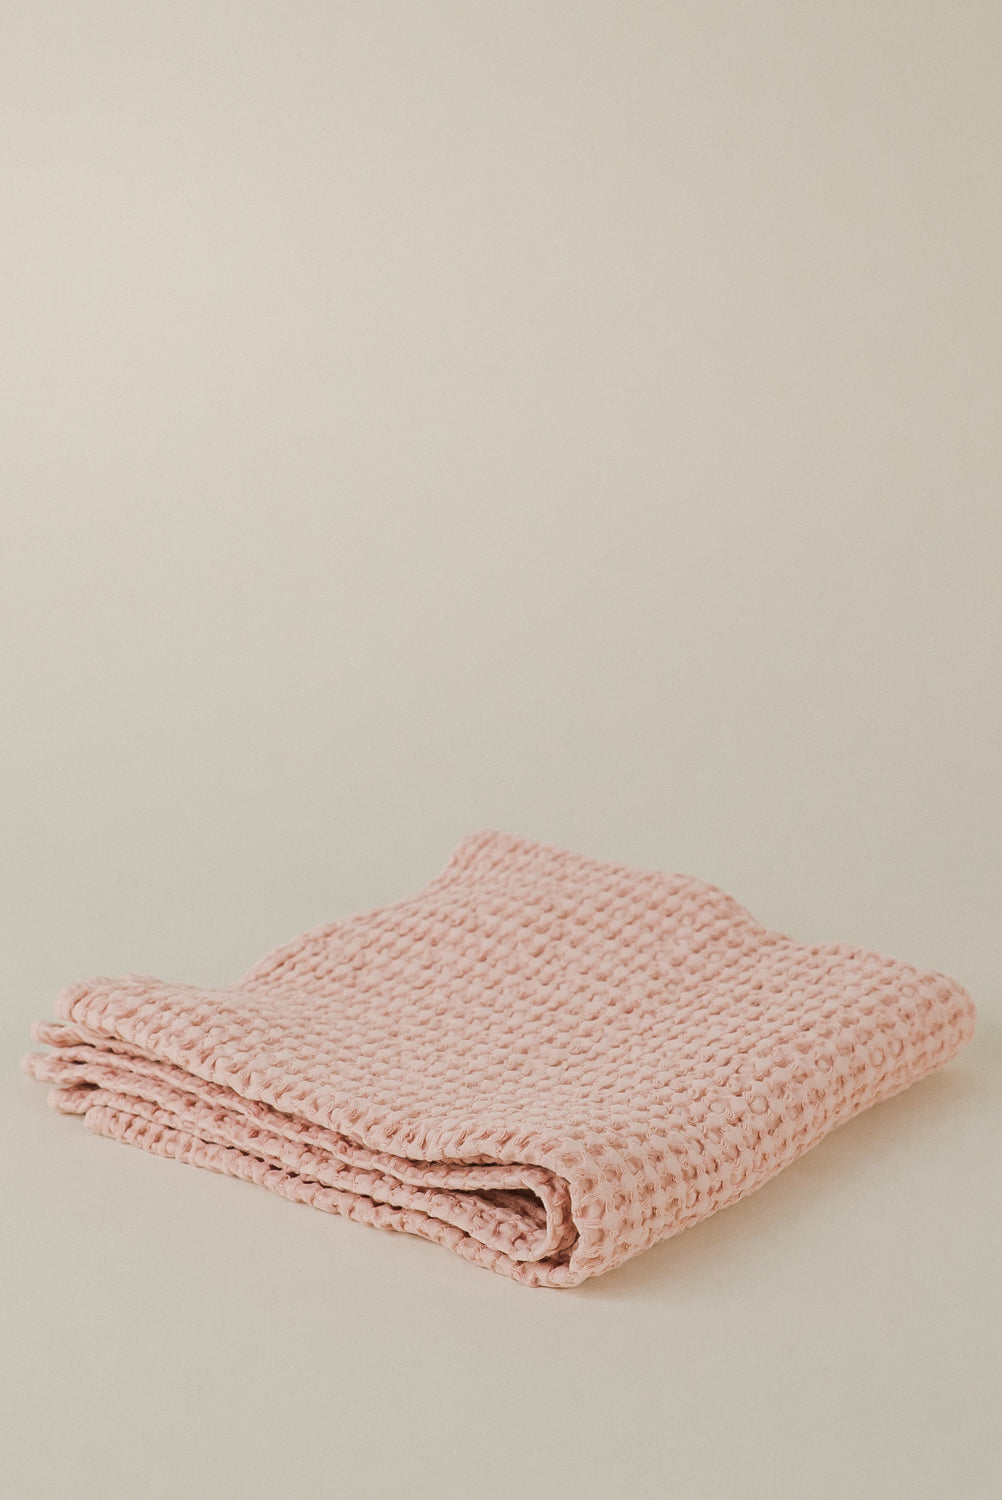 Hawkins New York Simple Waffle Towels - Bath Sheet, Blush